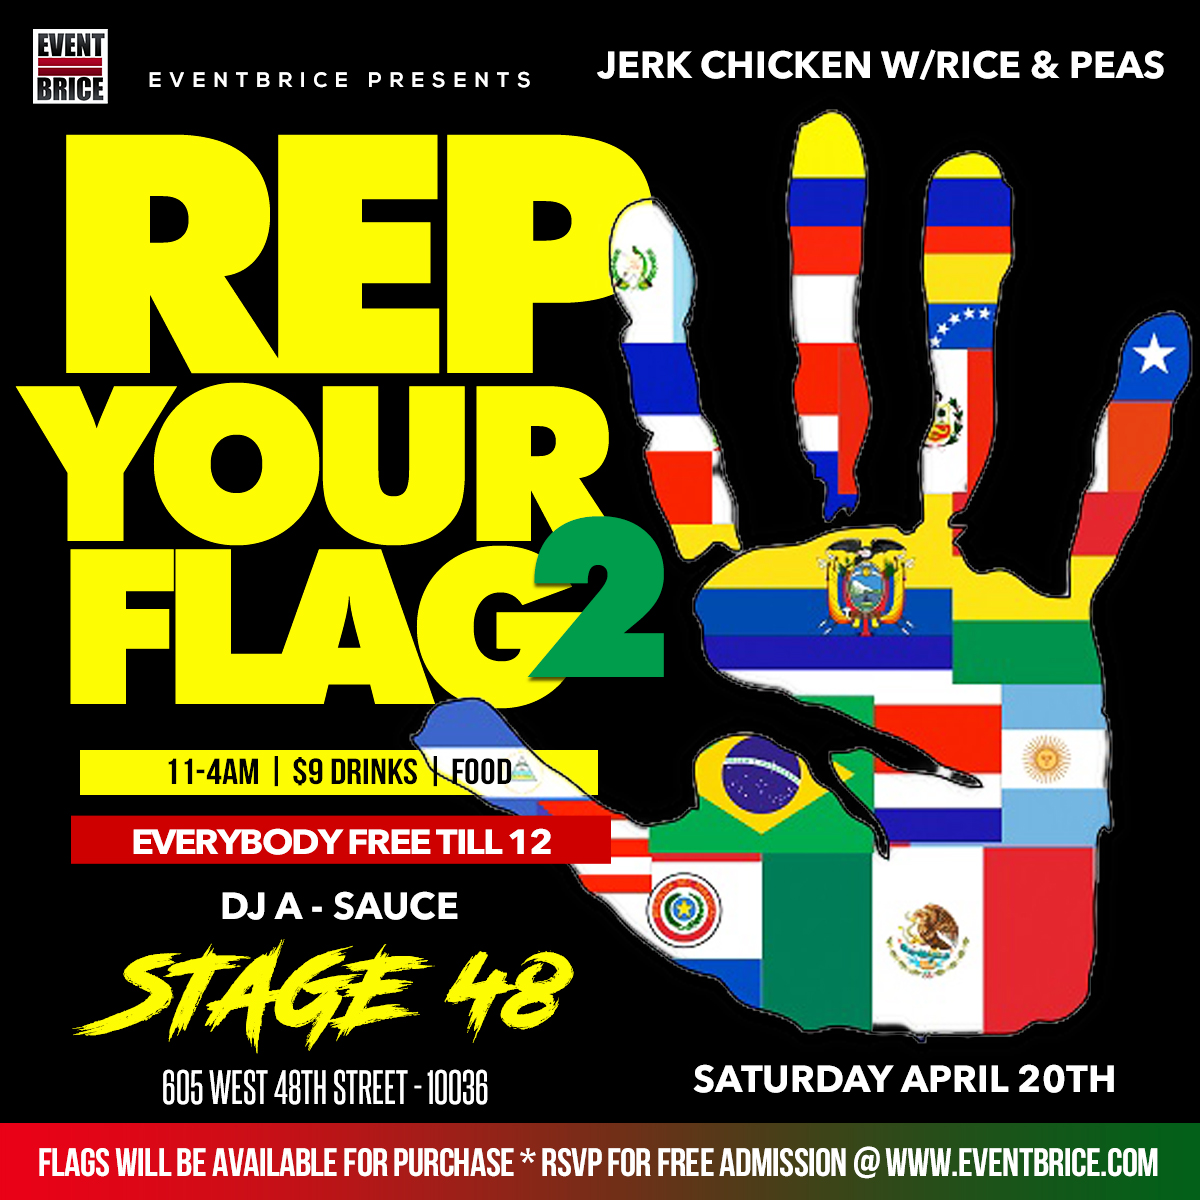 DRIP SATURDAY CARNIVAL REP YOUR FLAG 2 w/DJ ASAUCE Tickets, Sat, Apr